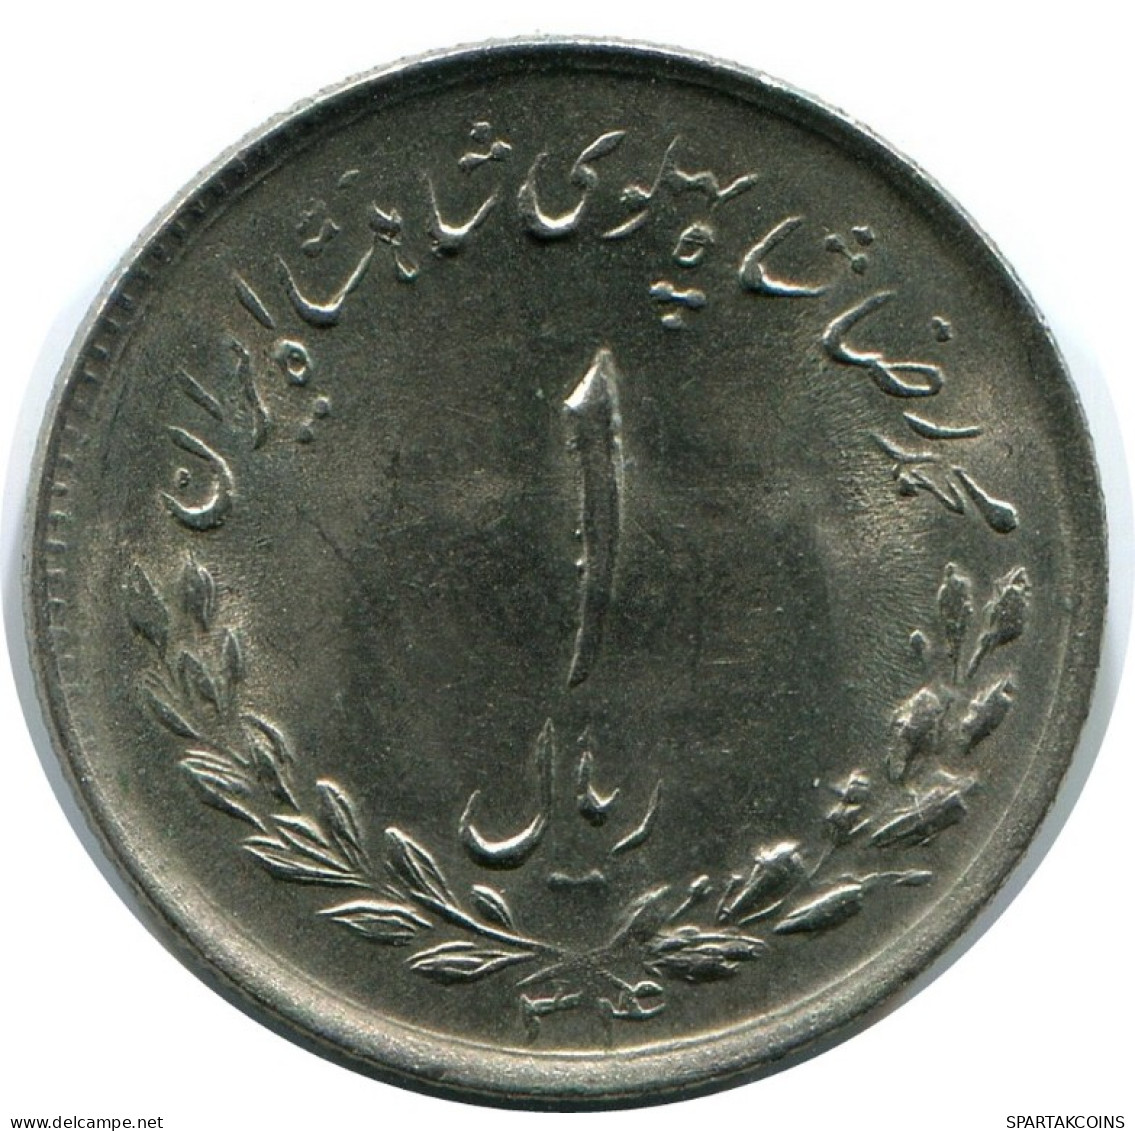 IRAN 1 RIAL 1955 / 1334 ISLAMIC COIN #AK076.U.A - Iran